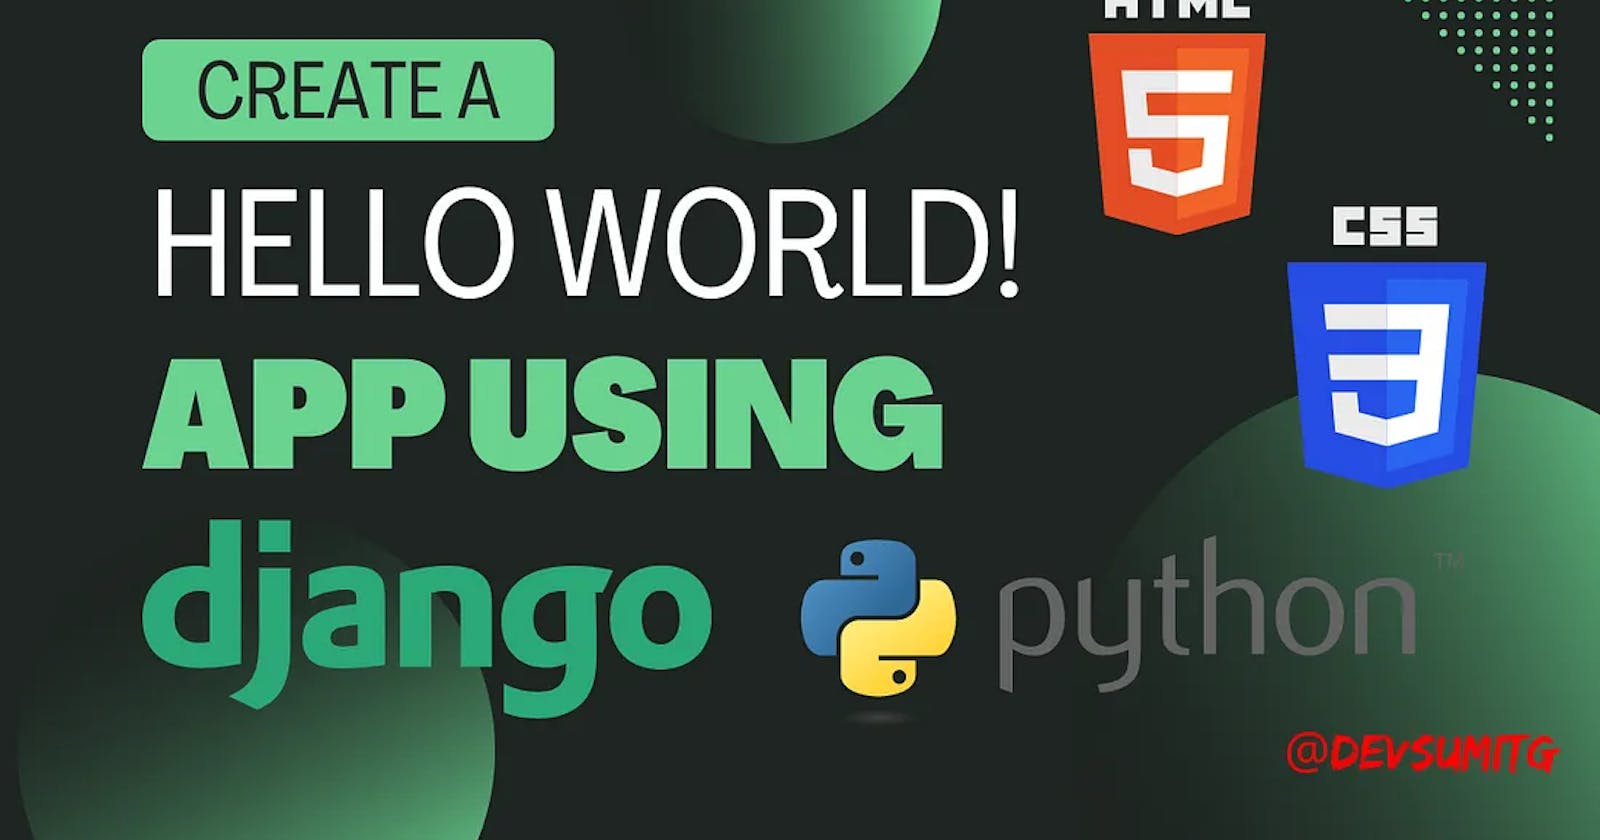 Create A Hello World! Application Using Django Framework